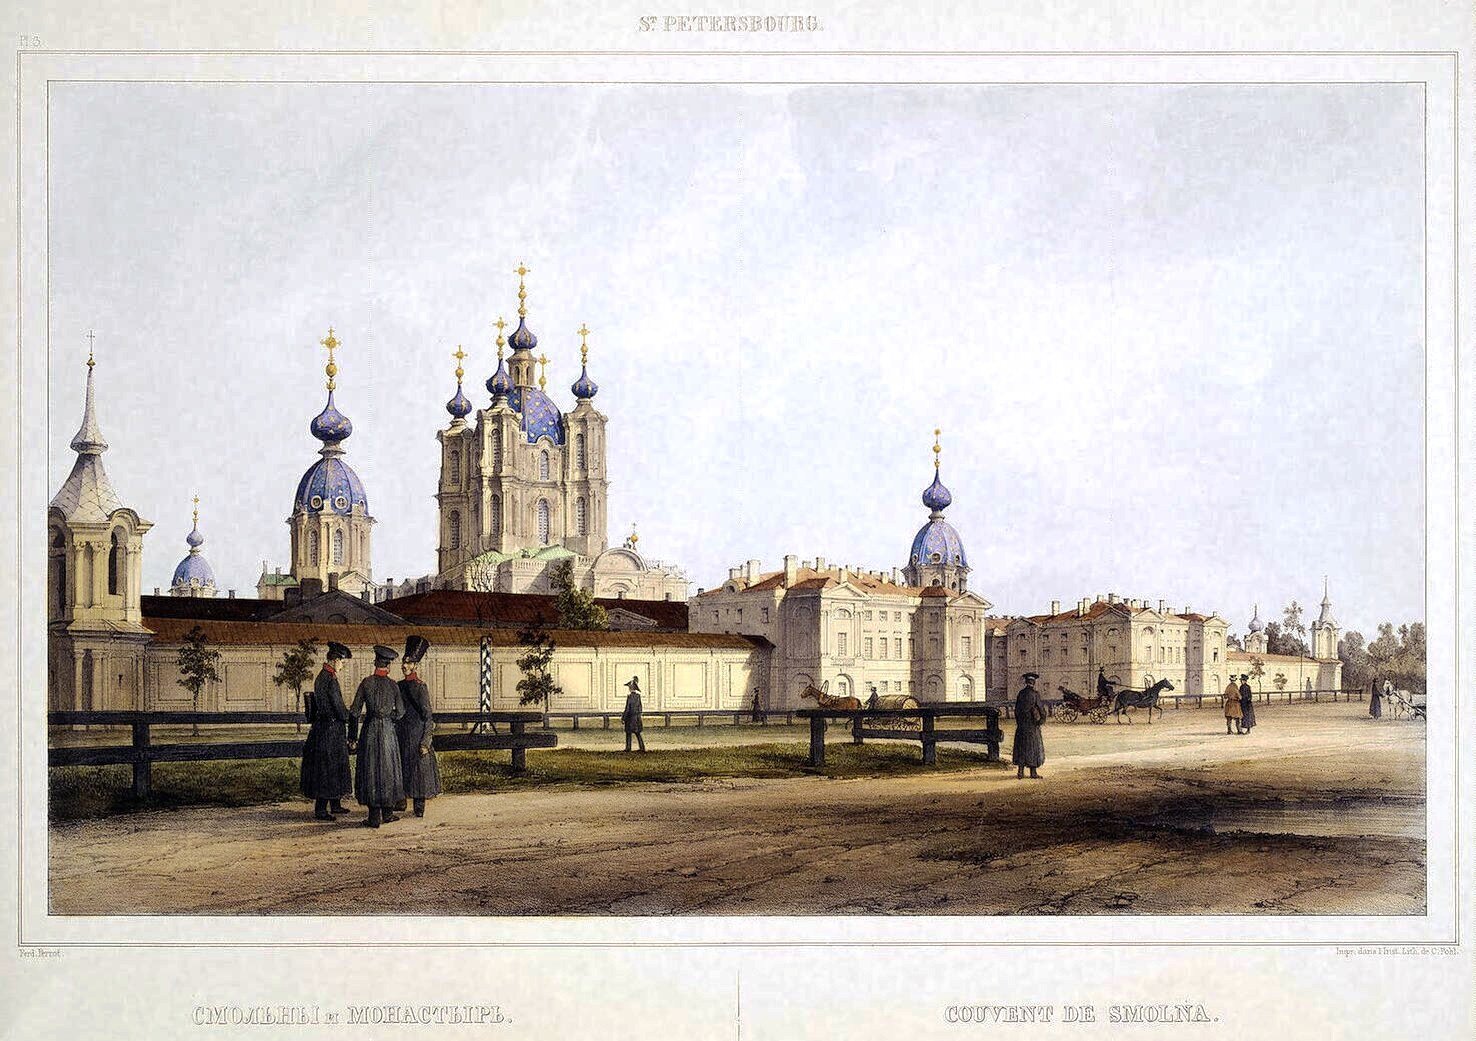 Monaster Smolny w Petersburgu Źródło: Monaster Smolny w Petersburgu, 1841, kolorowana litografia, Ermitaż, Petersburg, domena publiczna.